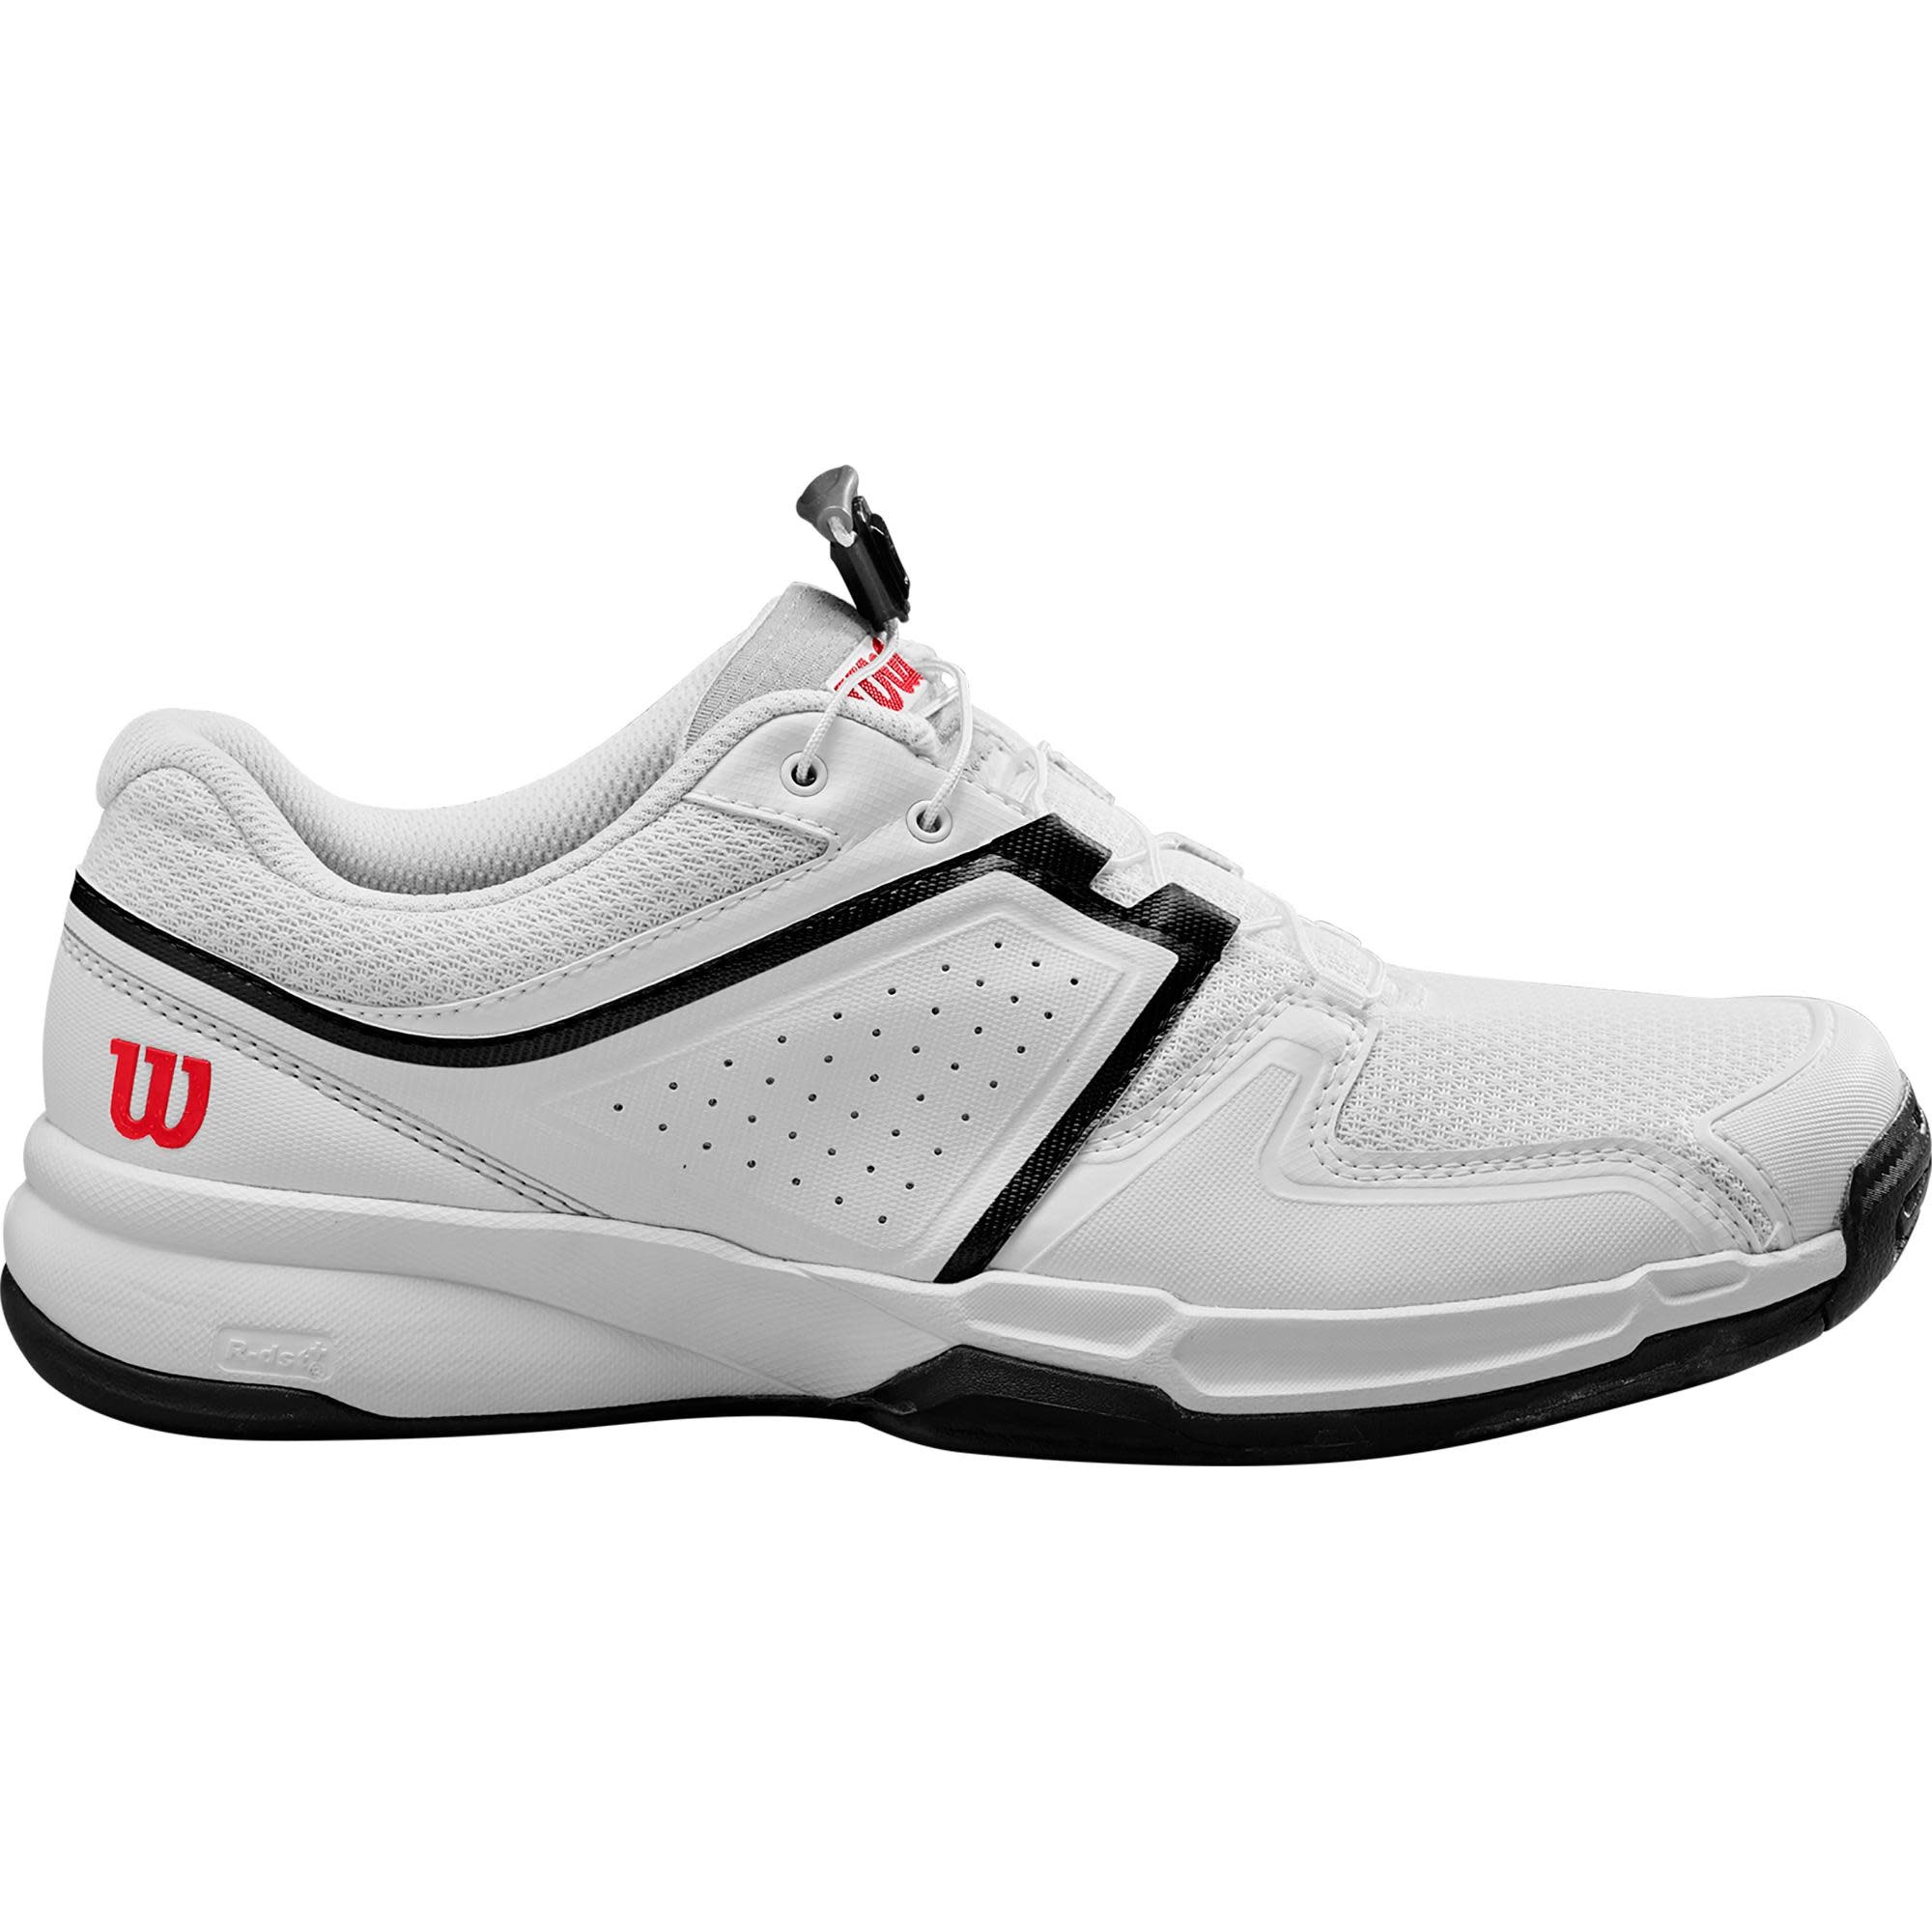 wilson shoes tennis